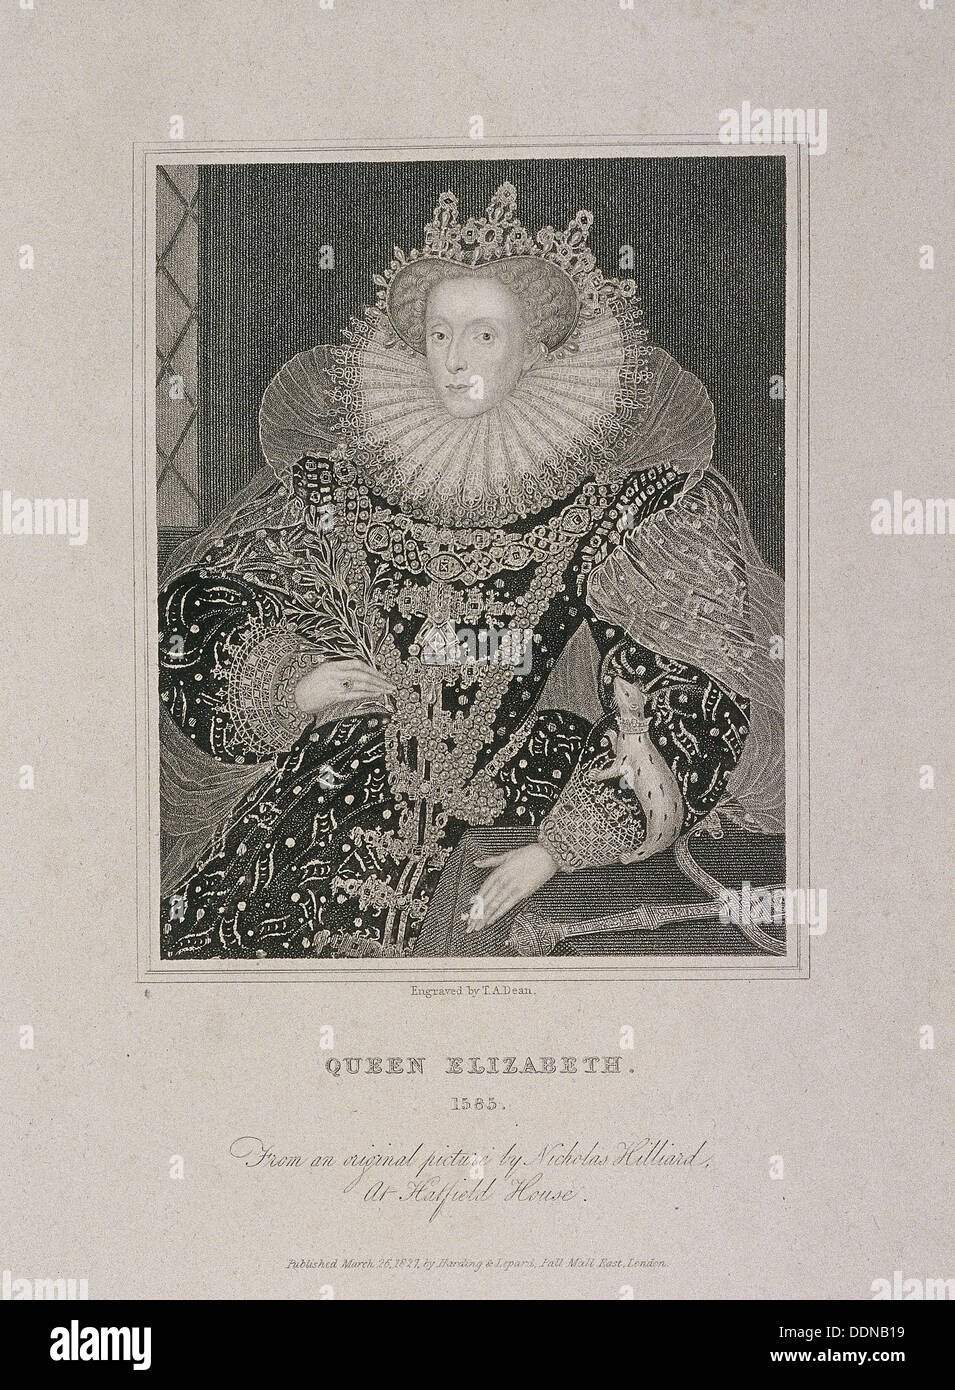 Queen Elizabeth I with an ermine, 1821. Artist: TA Dean Stock Photo